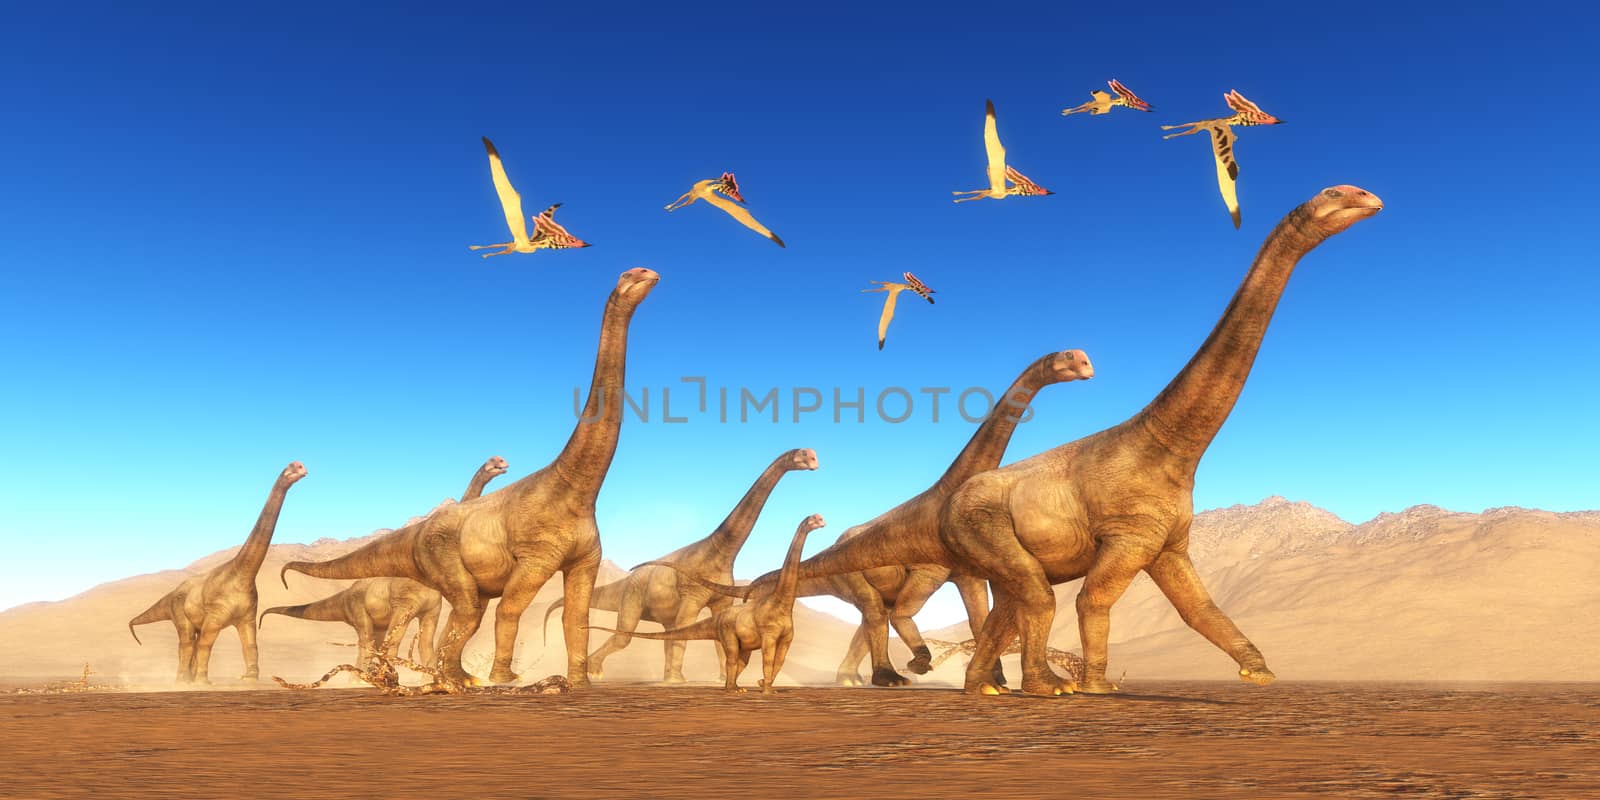 A flock of Thalassodromeus reptiles fly over a herd of Brontomerus dinosaurs crossing a desert area.